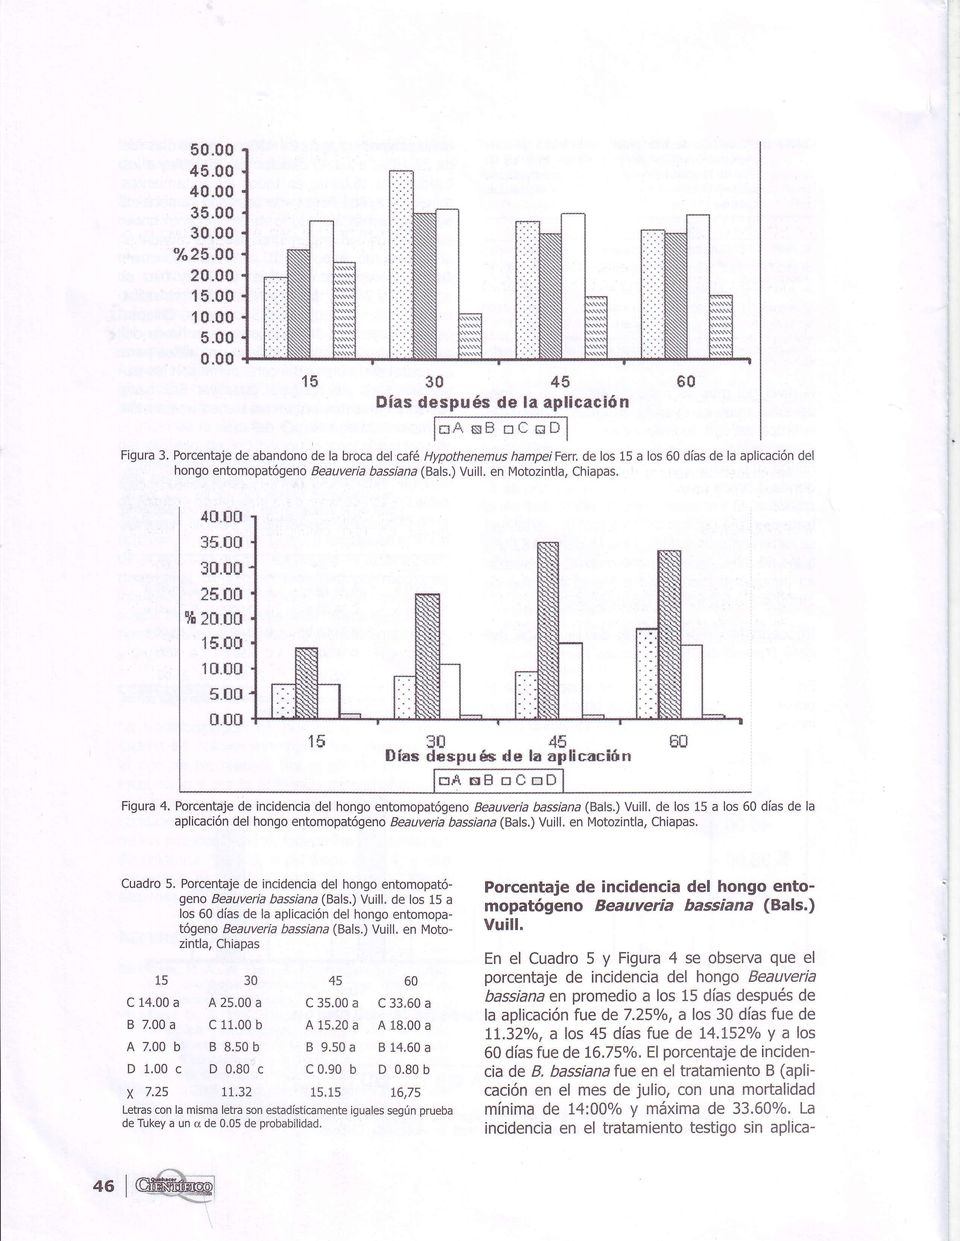 ilü Días il *1S ñ$pufu d* la aplicaciún na sft üüüü Figura 4. Porcentaje de incidencia del hongo entomopatógeno Beauveria bassiana (Bals.) Vuill.